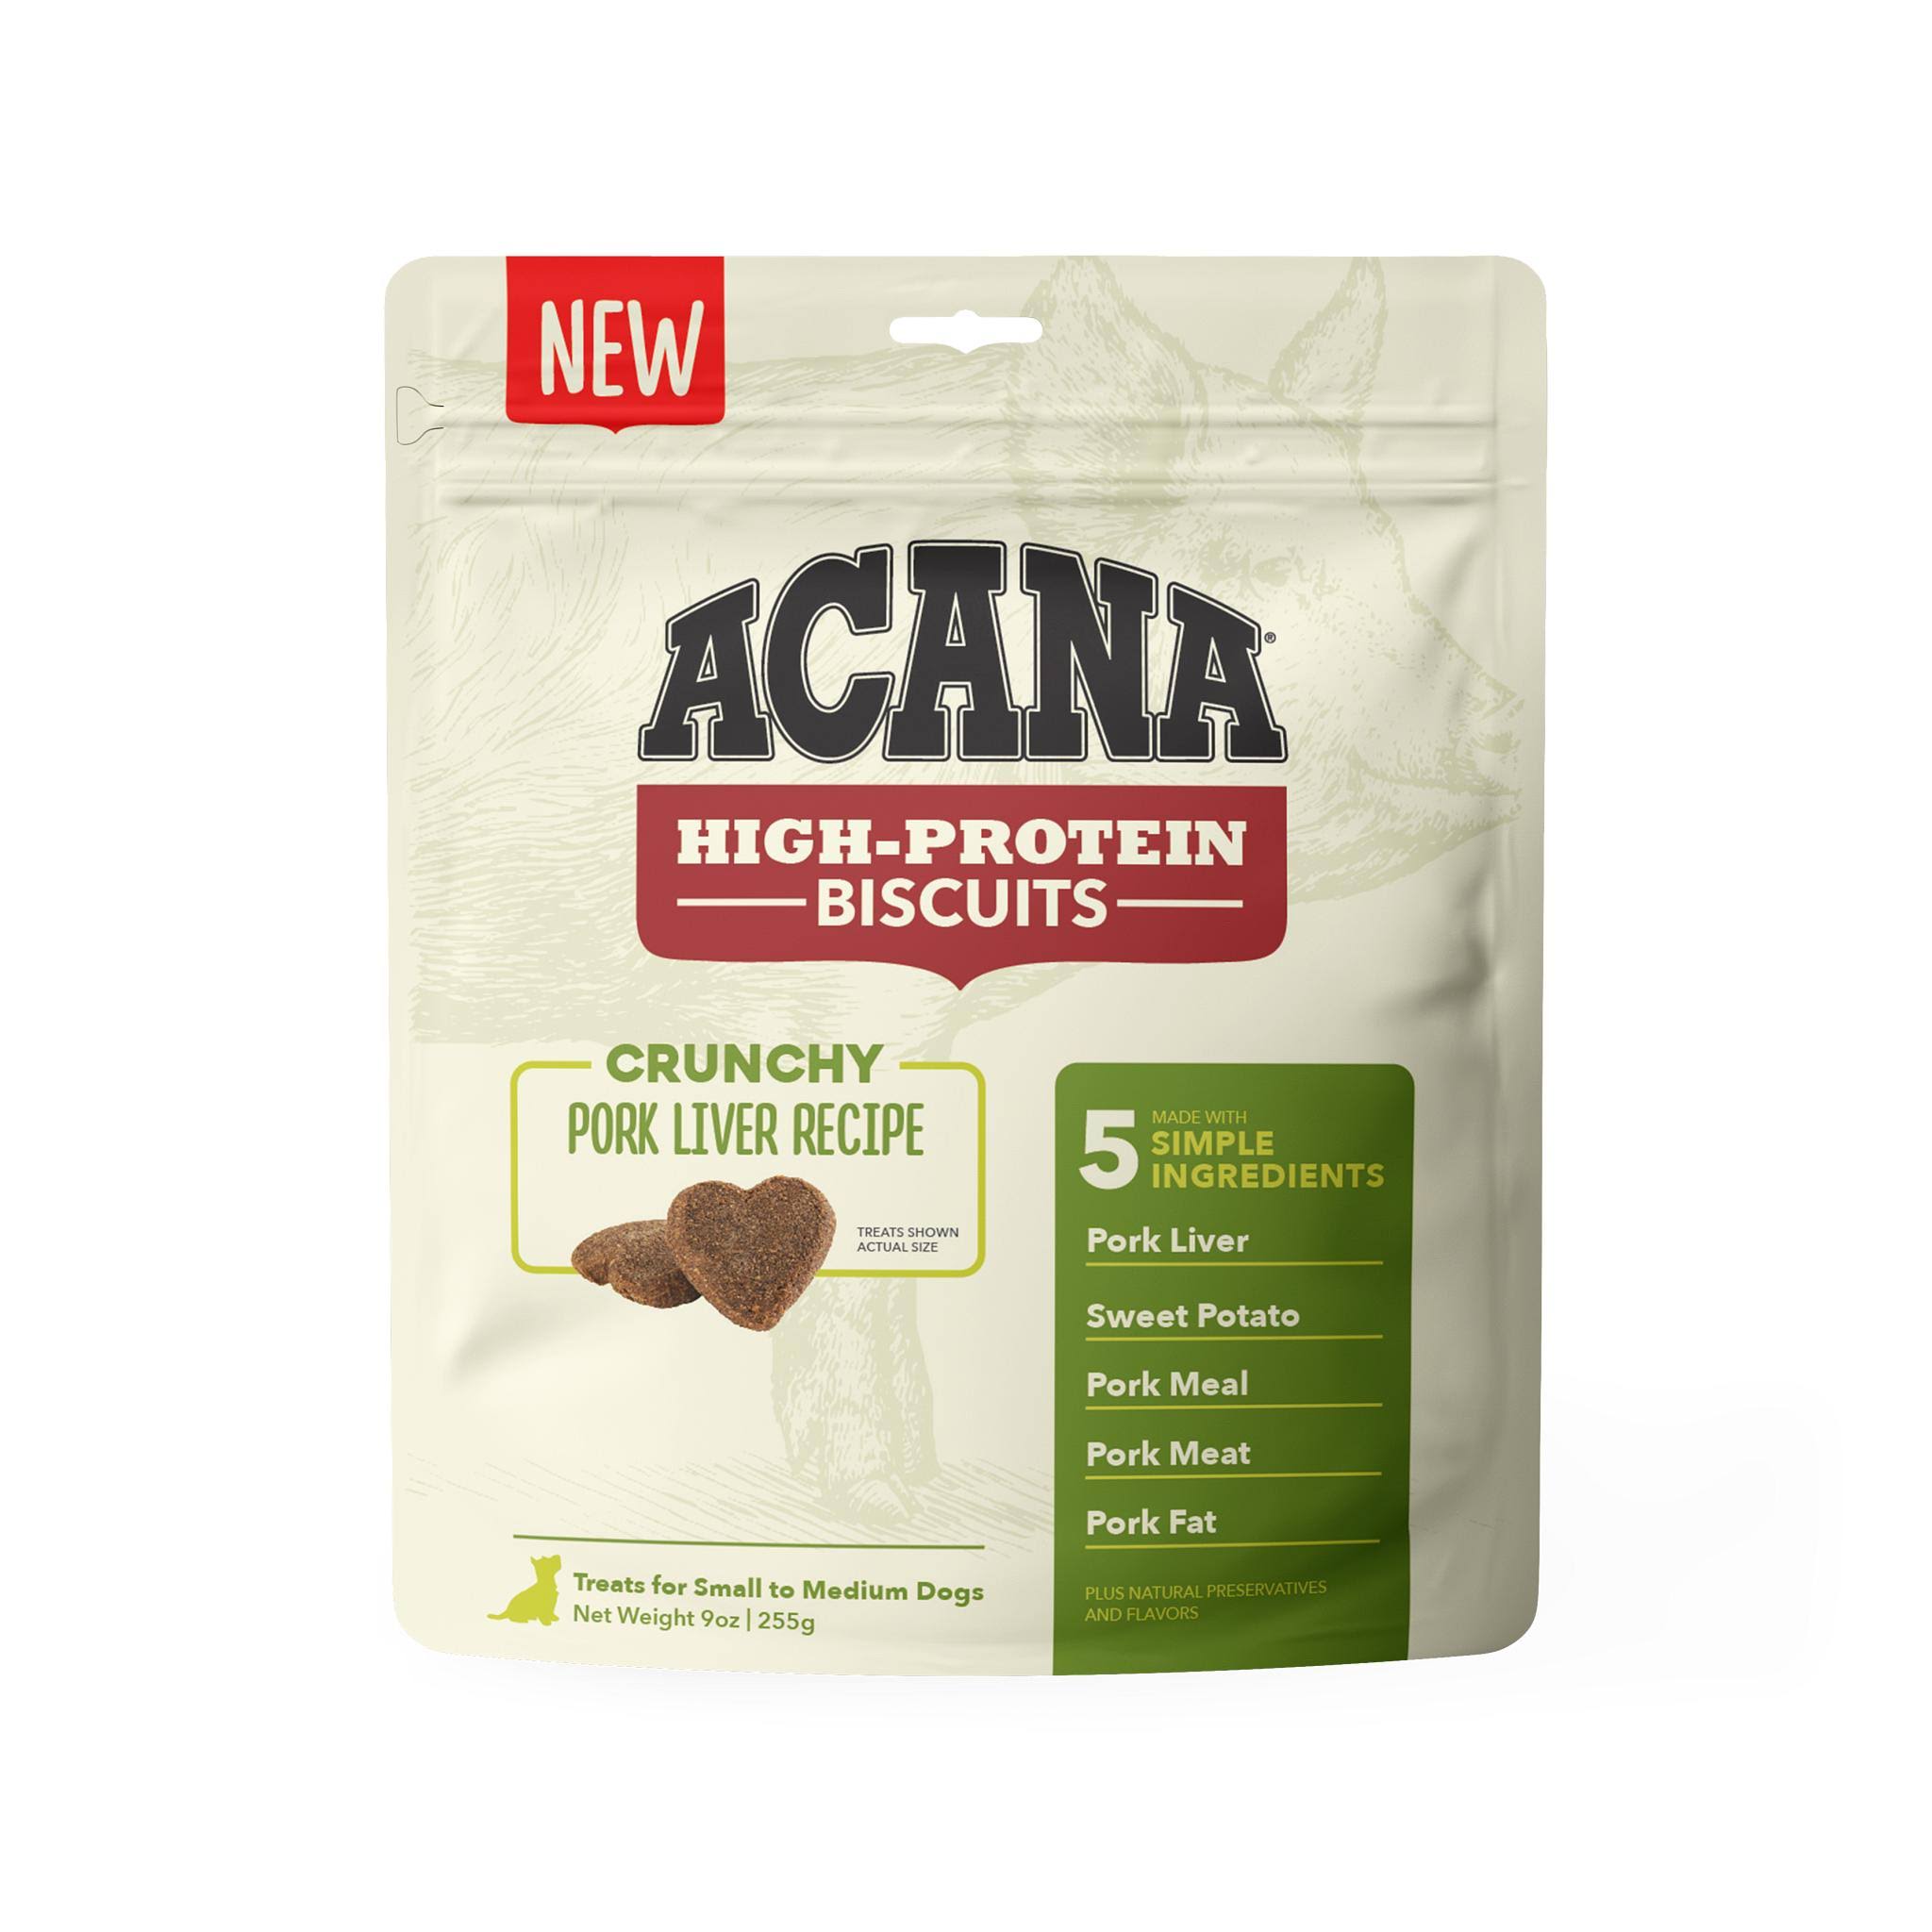 ACANA Crunchy Biscuits Dog, High-Protein, Treats Pork Liver Recipe, Small, 9 Ounces